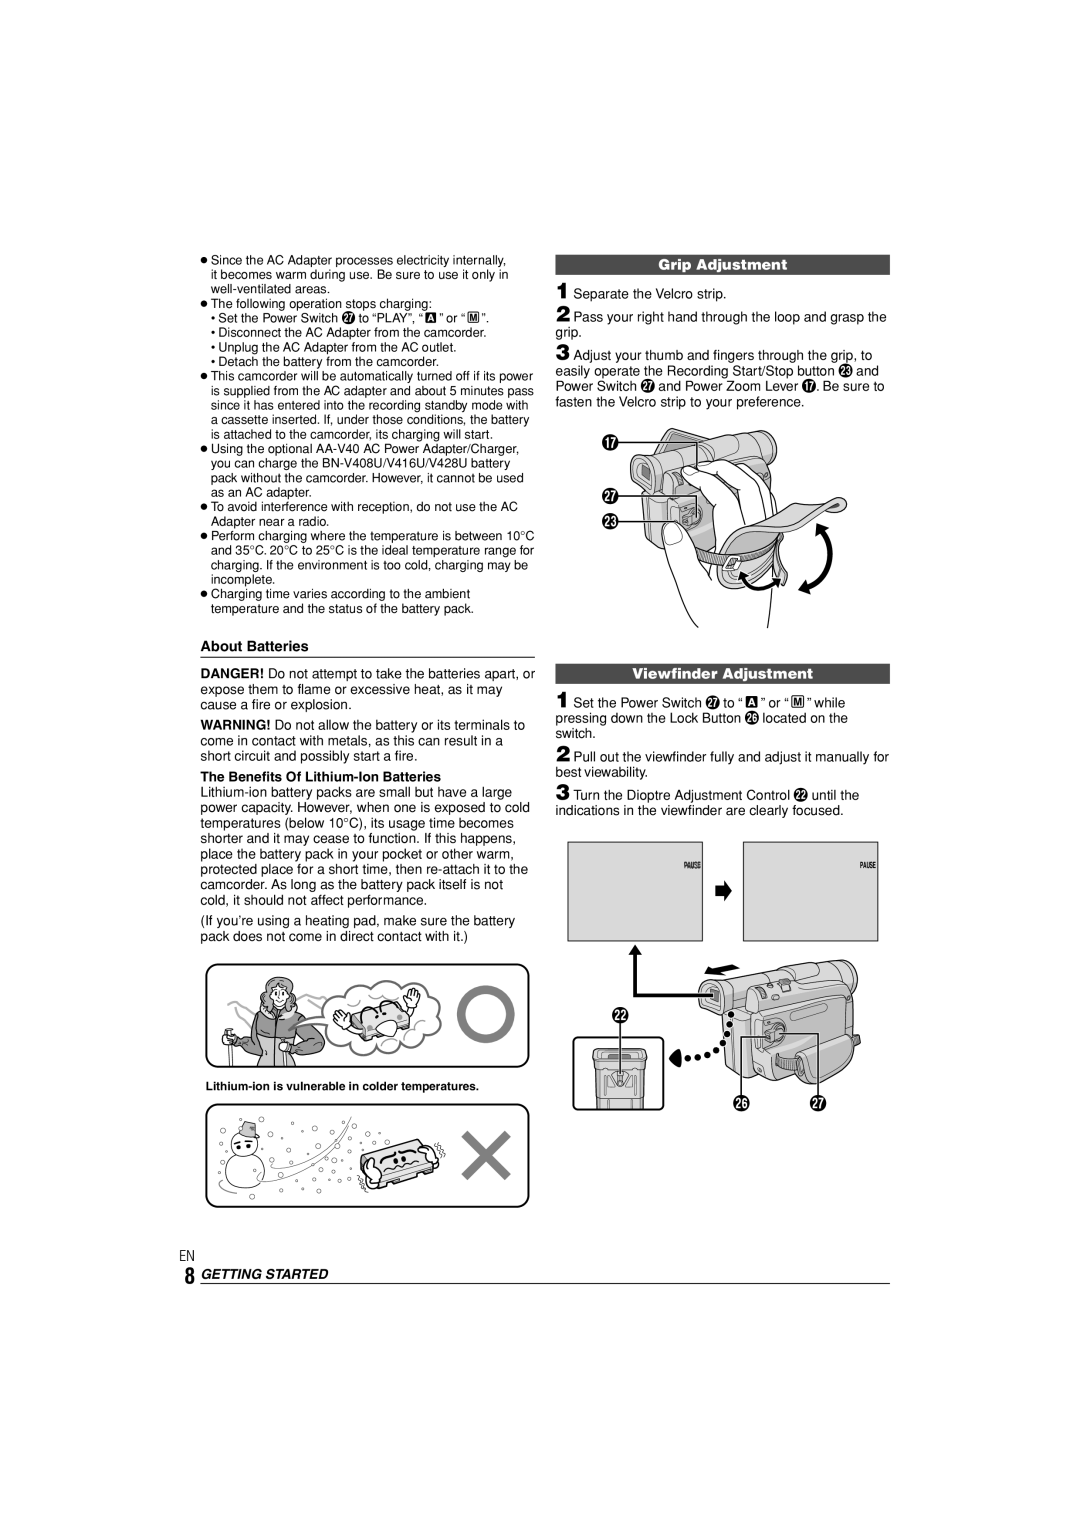 JVC GR-D90 GR-D70 instruction manual w y u, Grip Adjustment, Viewfinder Adjustment, The Benefits Of Lithium-Ion Batteries 